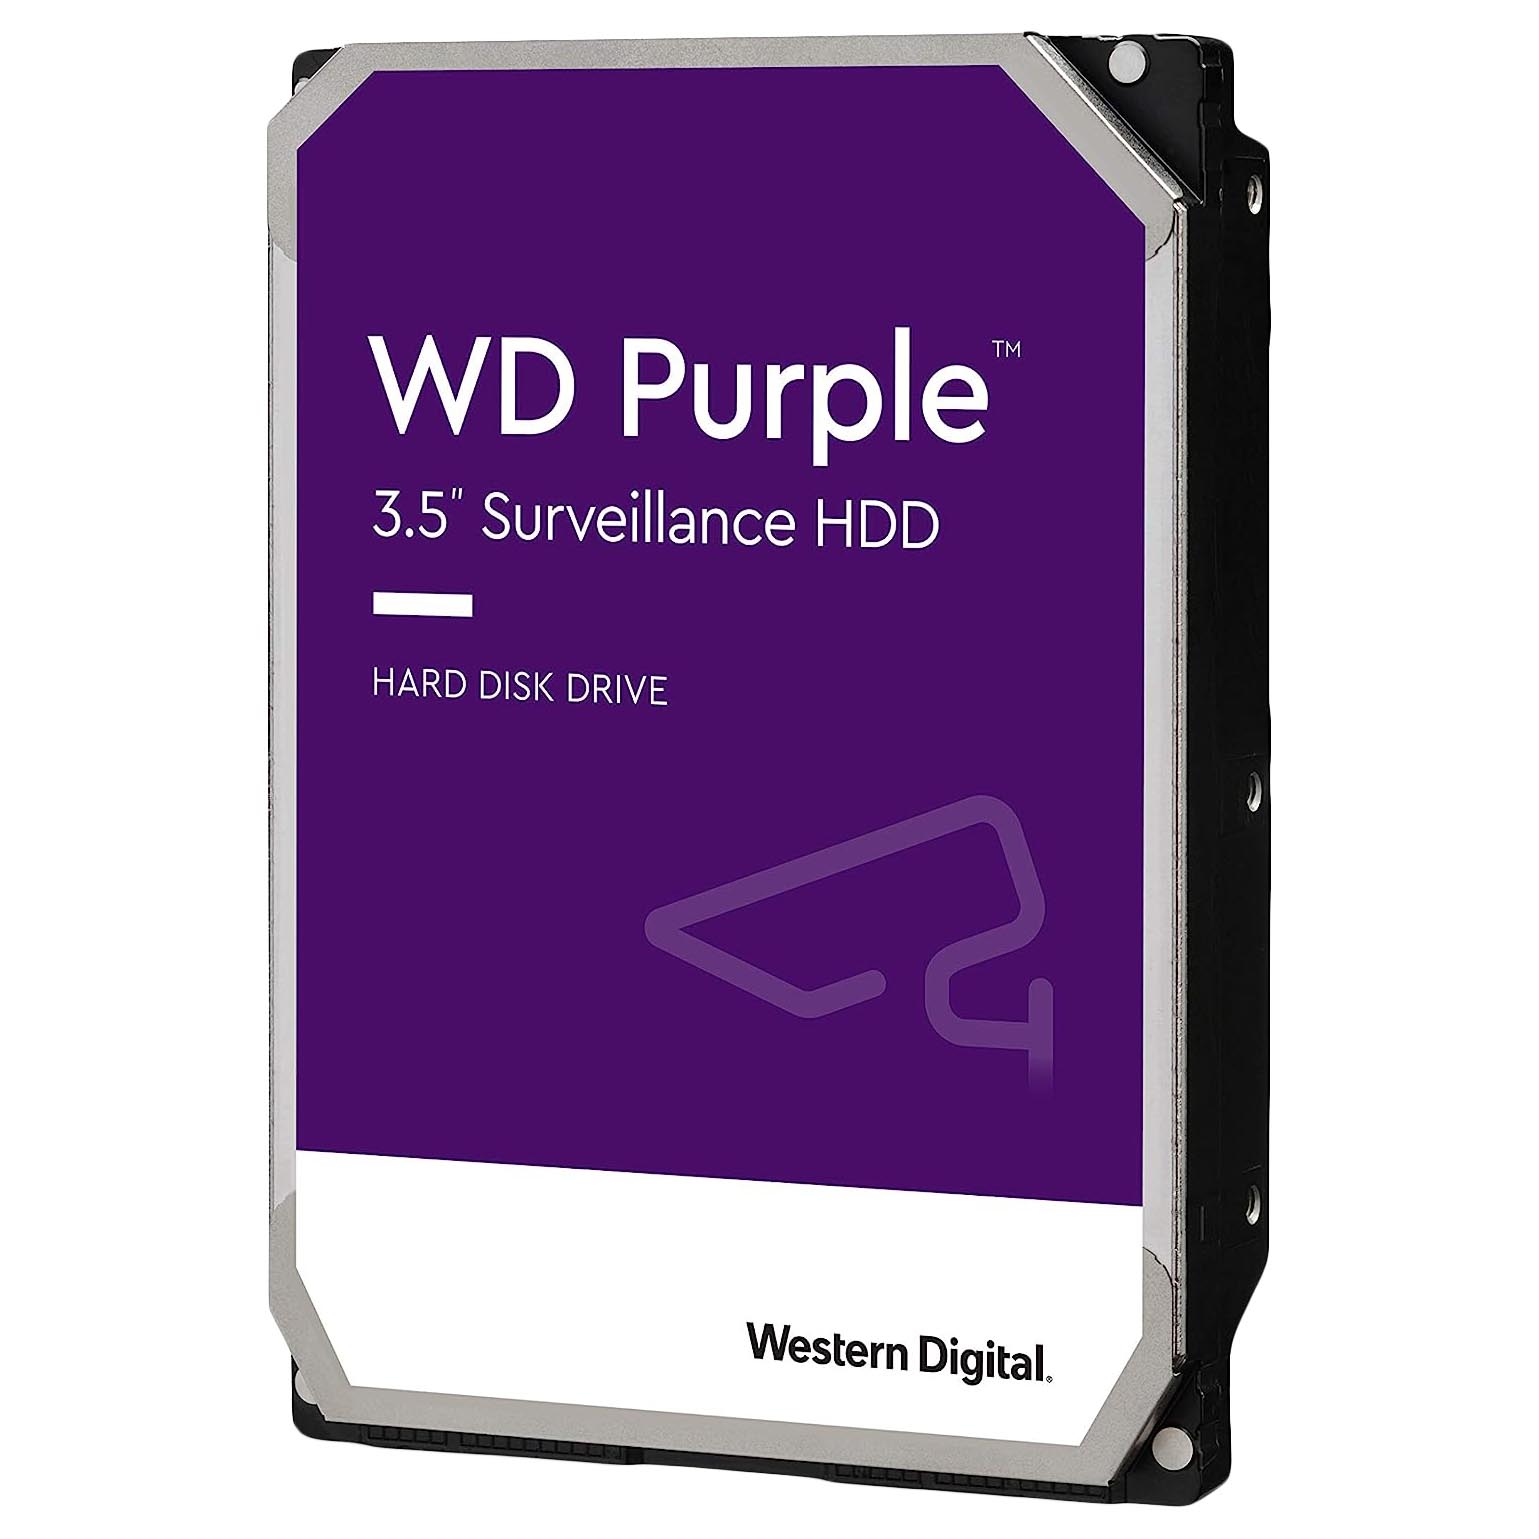 Внутренний жесткий диск Western Digital WD Purple Surveillance, WD63PURZ, 6Тб жесткий диск western digital wd original sata iii 6tb wd63purz video streaming purple 5640rpm 256mb 3 5 wd63purz